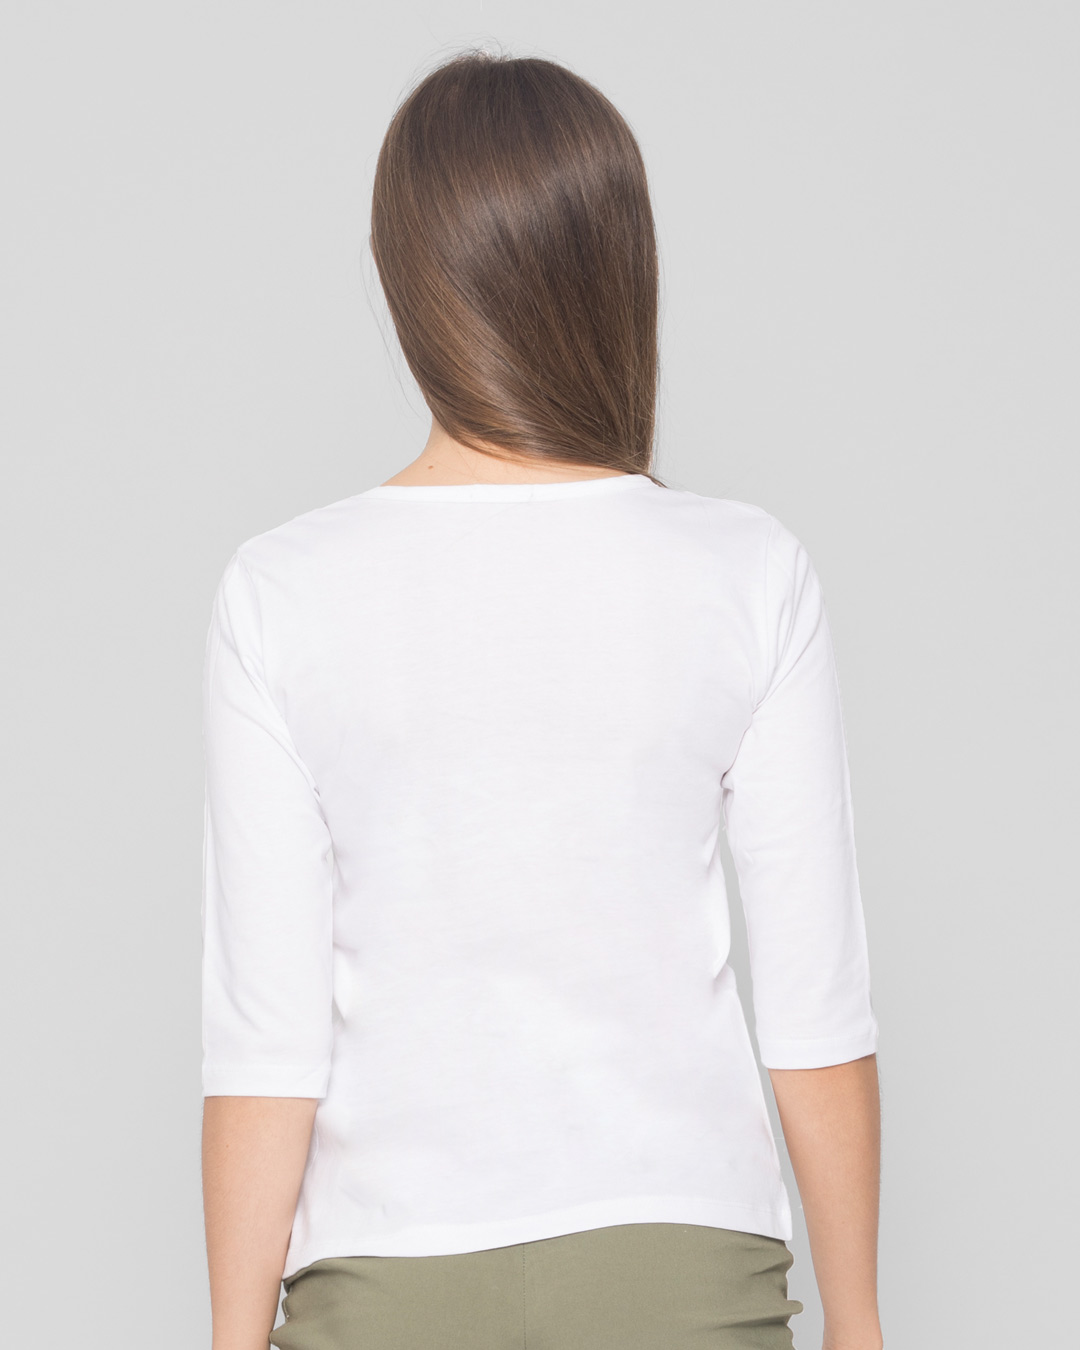 Shop Bonjour Heart Round Neck 3/4 Sleeve T-Shirt White-Back